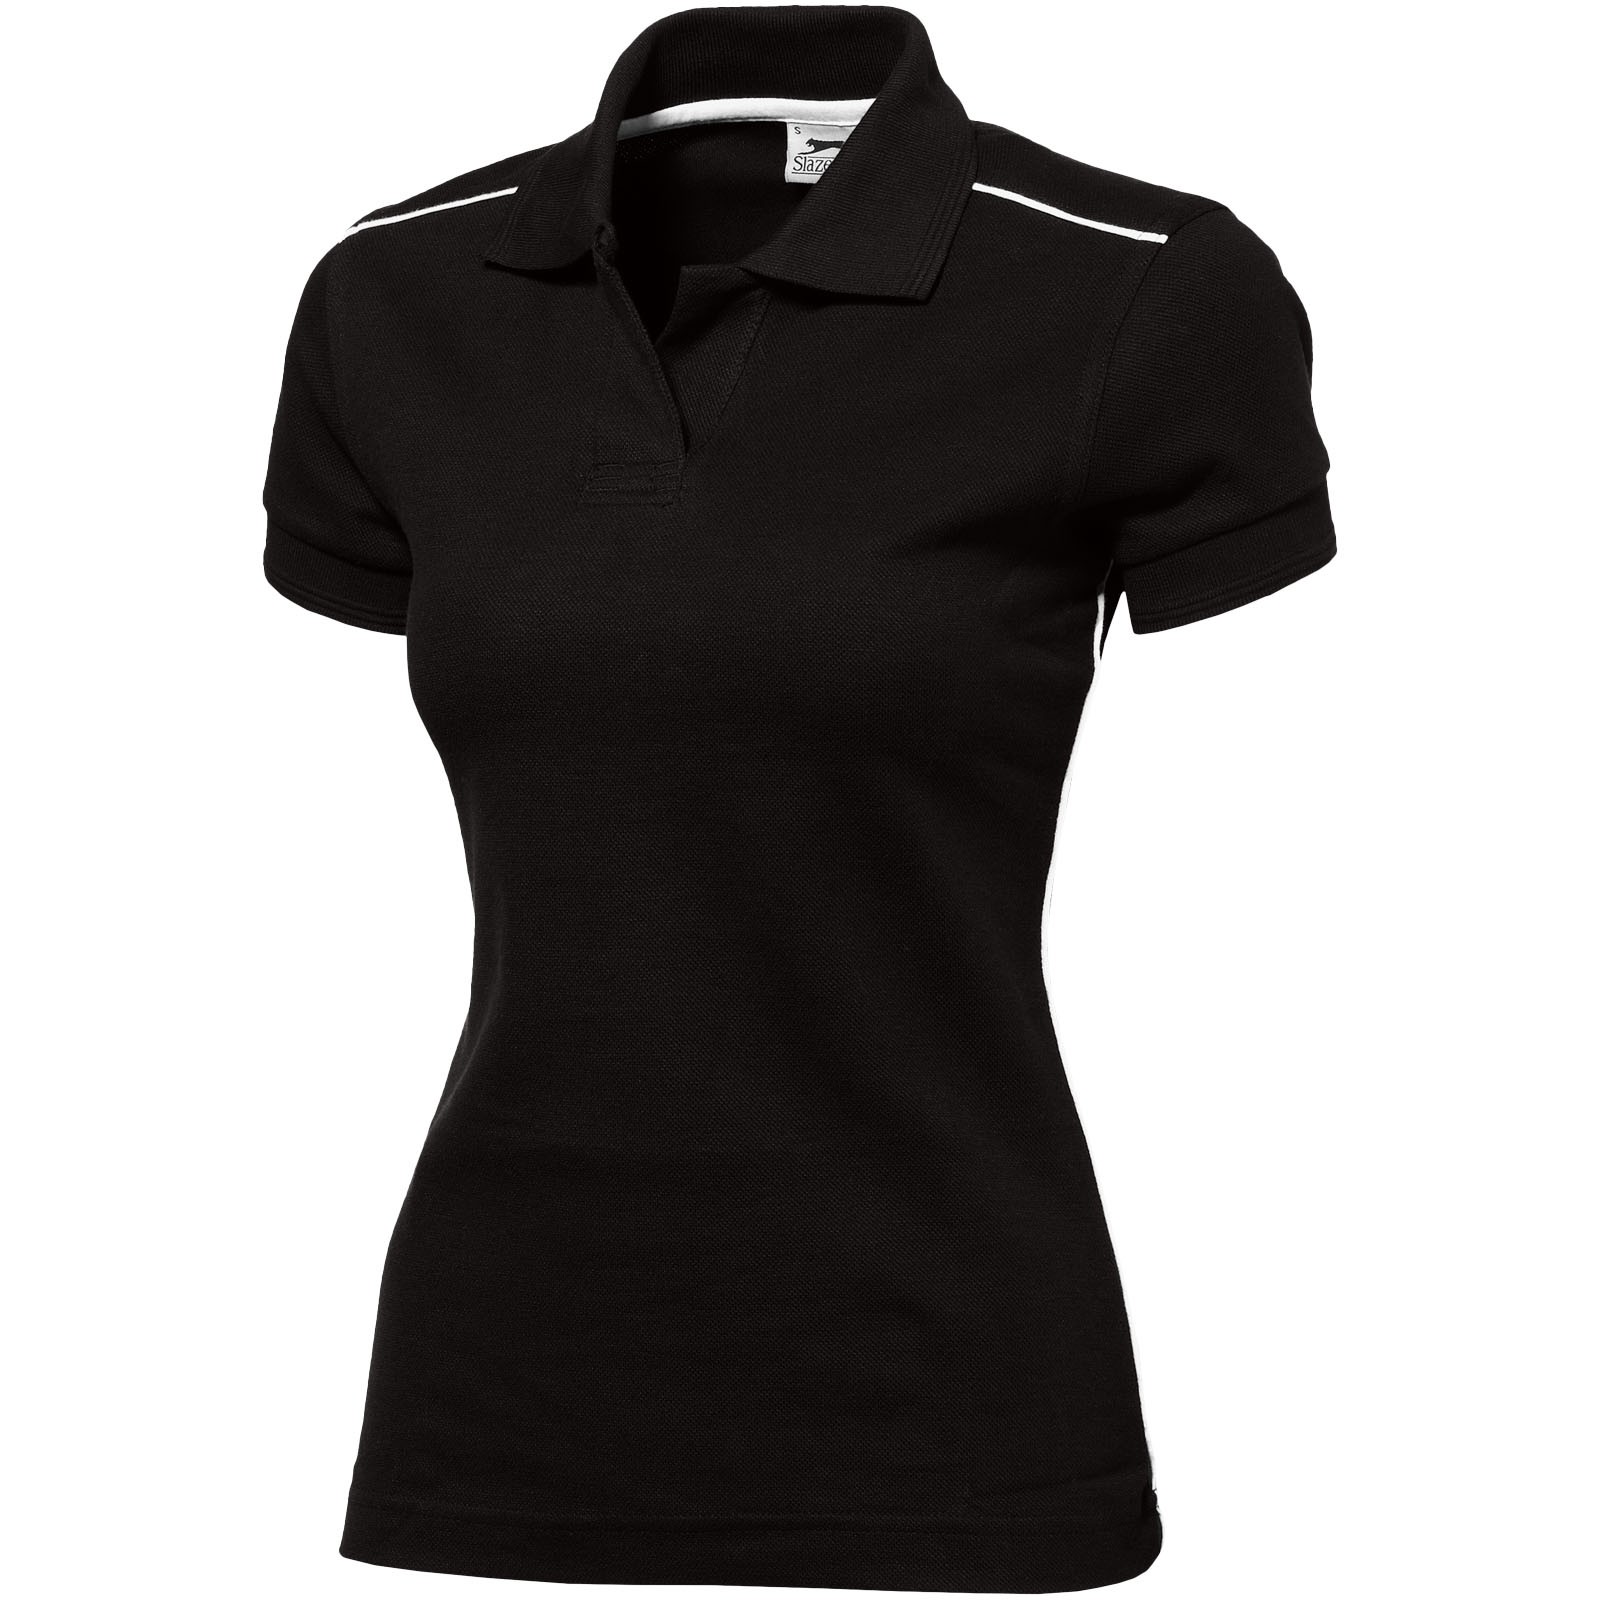 Backhand short sleeve ladies polo - Solid Black / XL